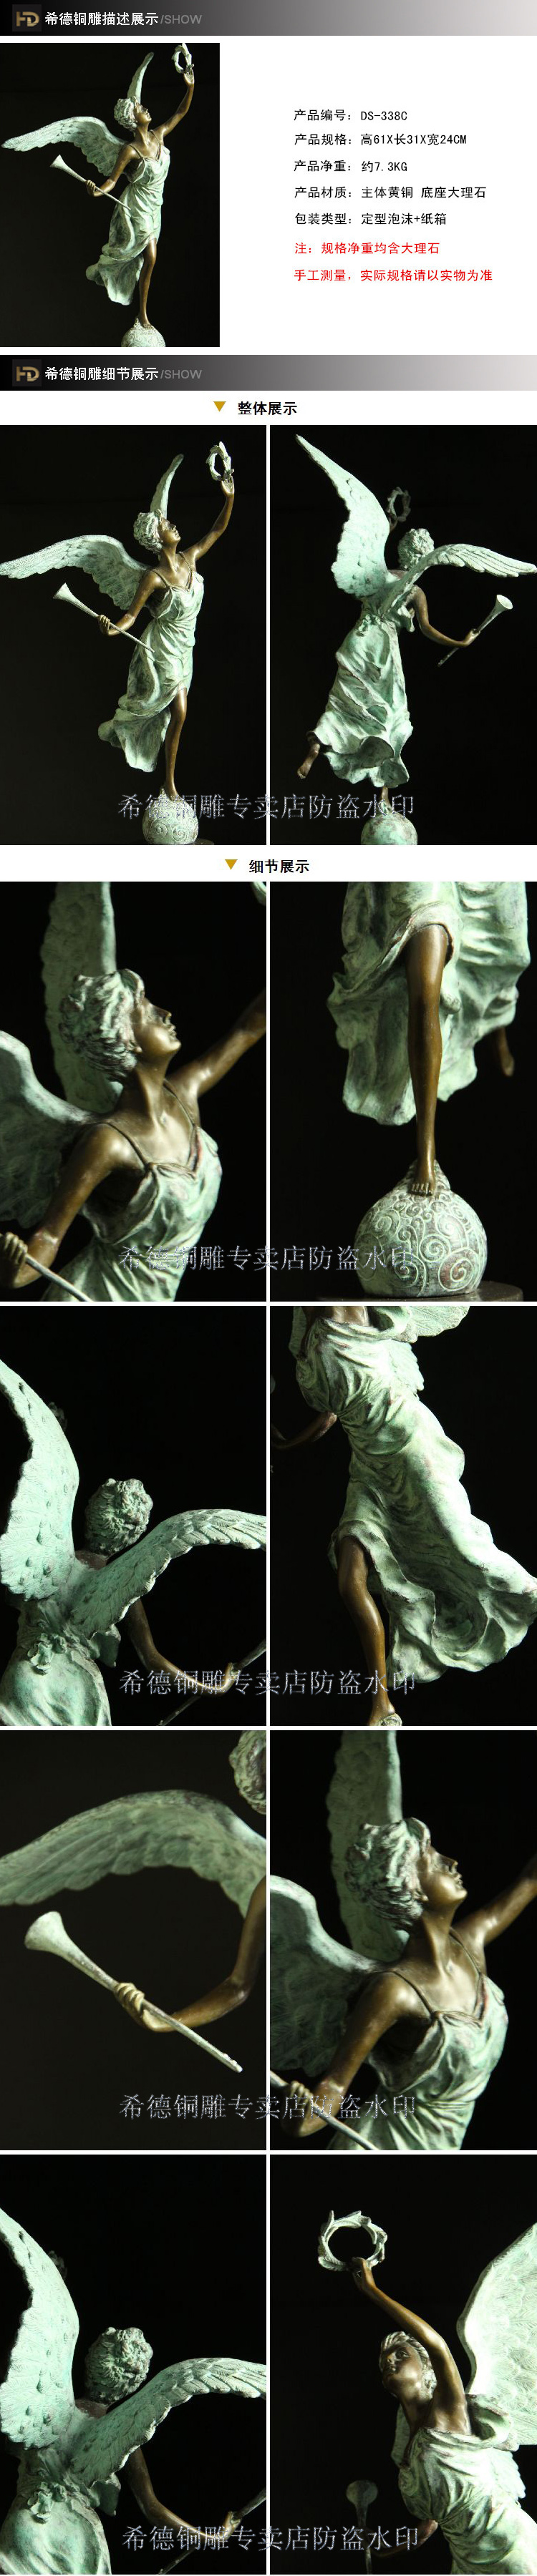 Bronze sculpture, copper sculpture crafts home decoration quality gift wings ds-338c